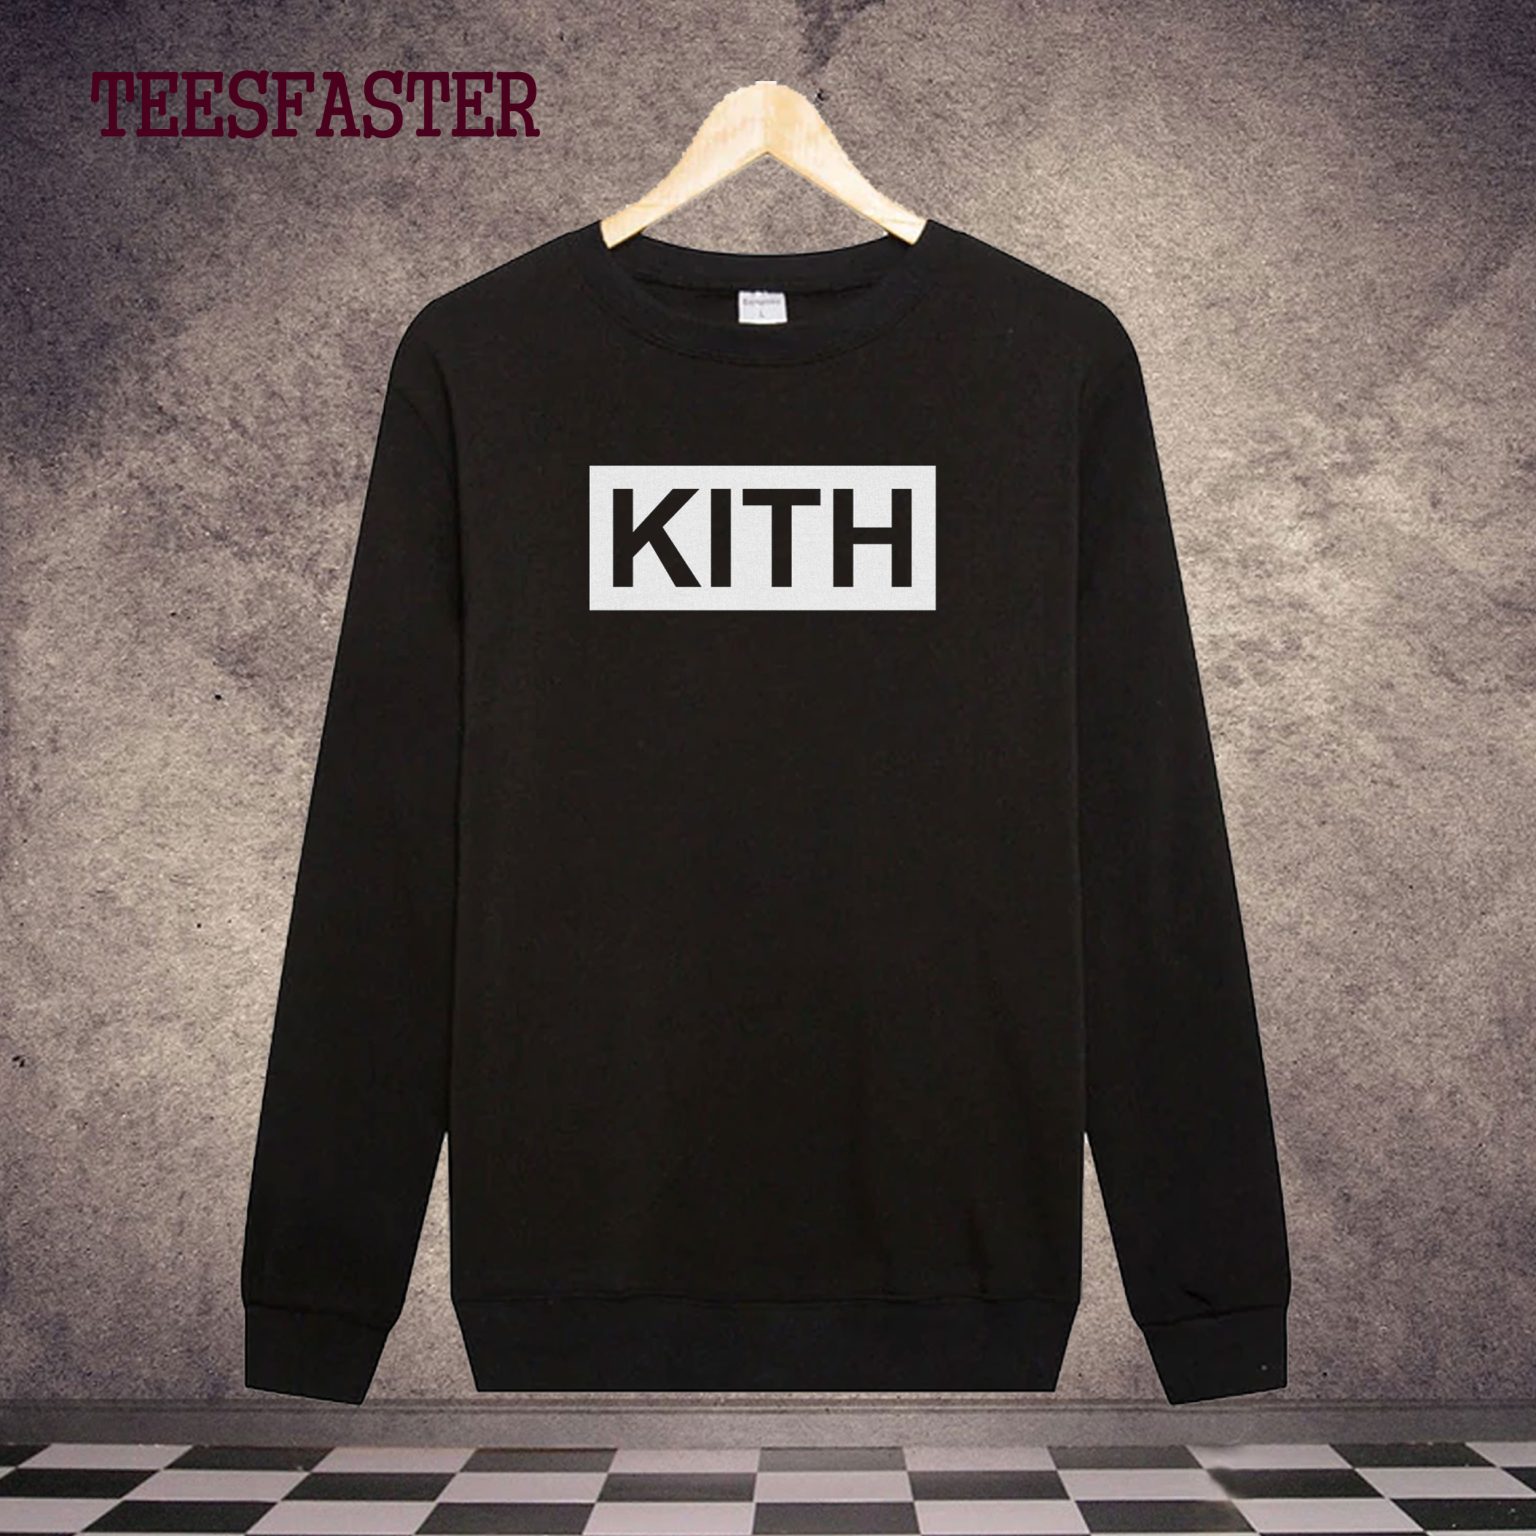 Kith Sweatshirt